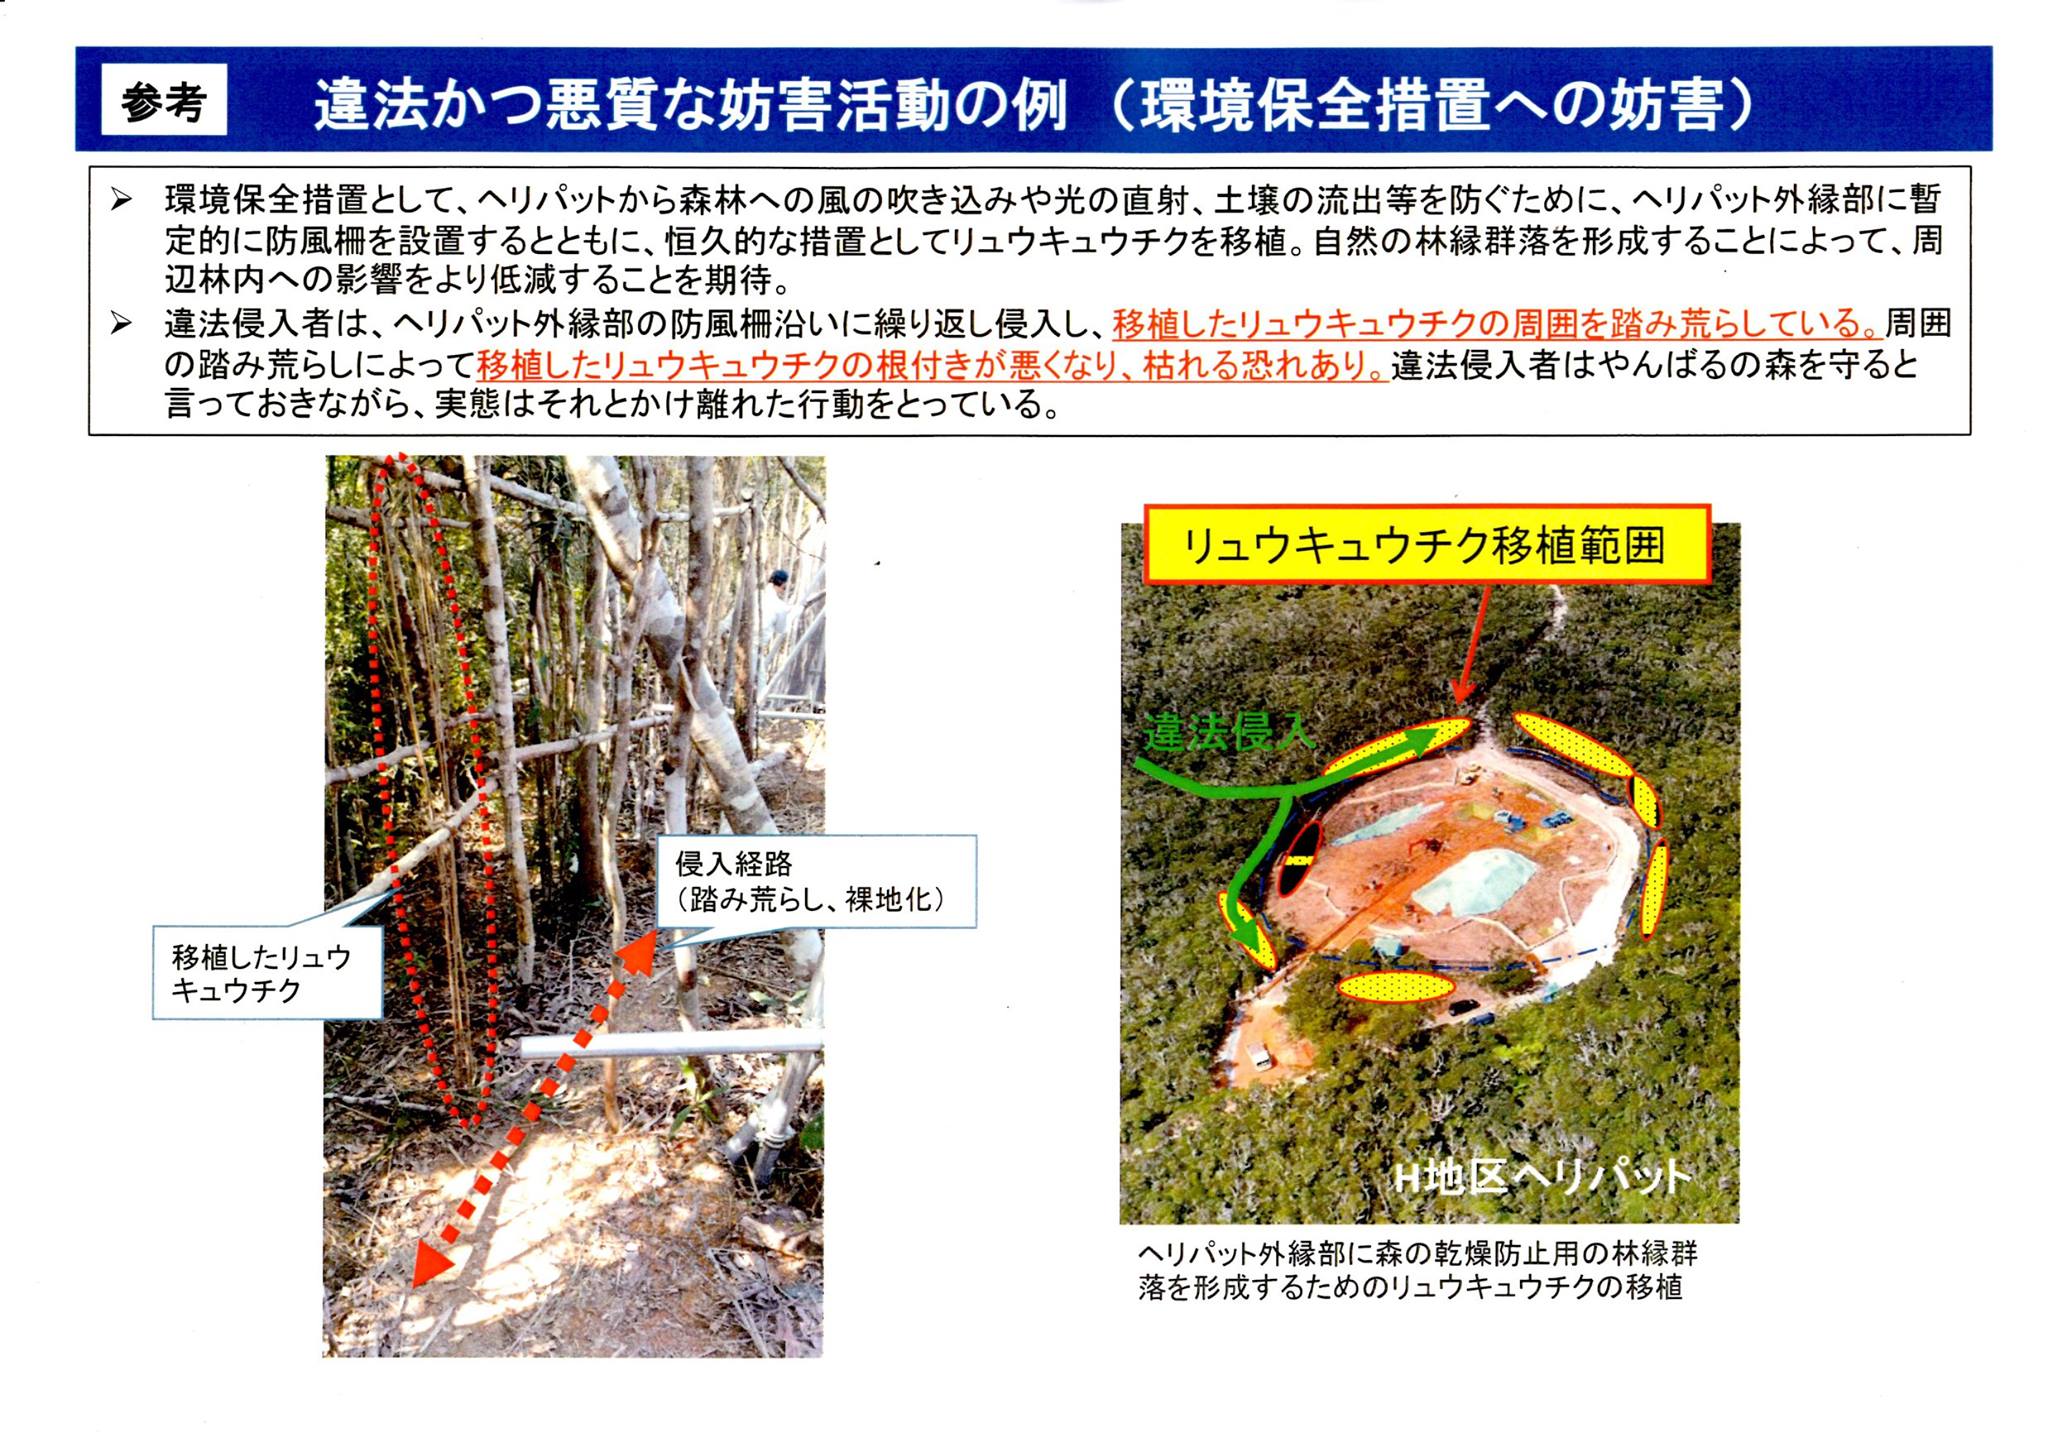 http://livedoor.blogimg.jp/mona_news/imgs/f/0/f0954191.jpg